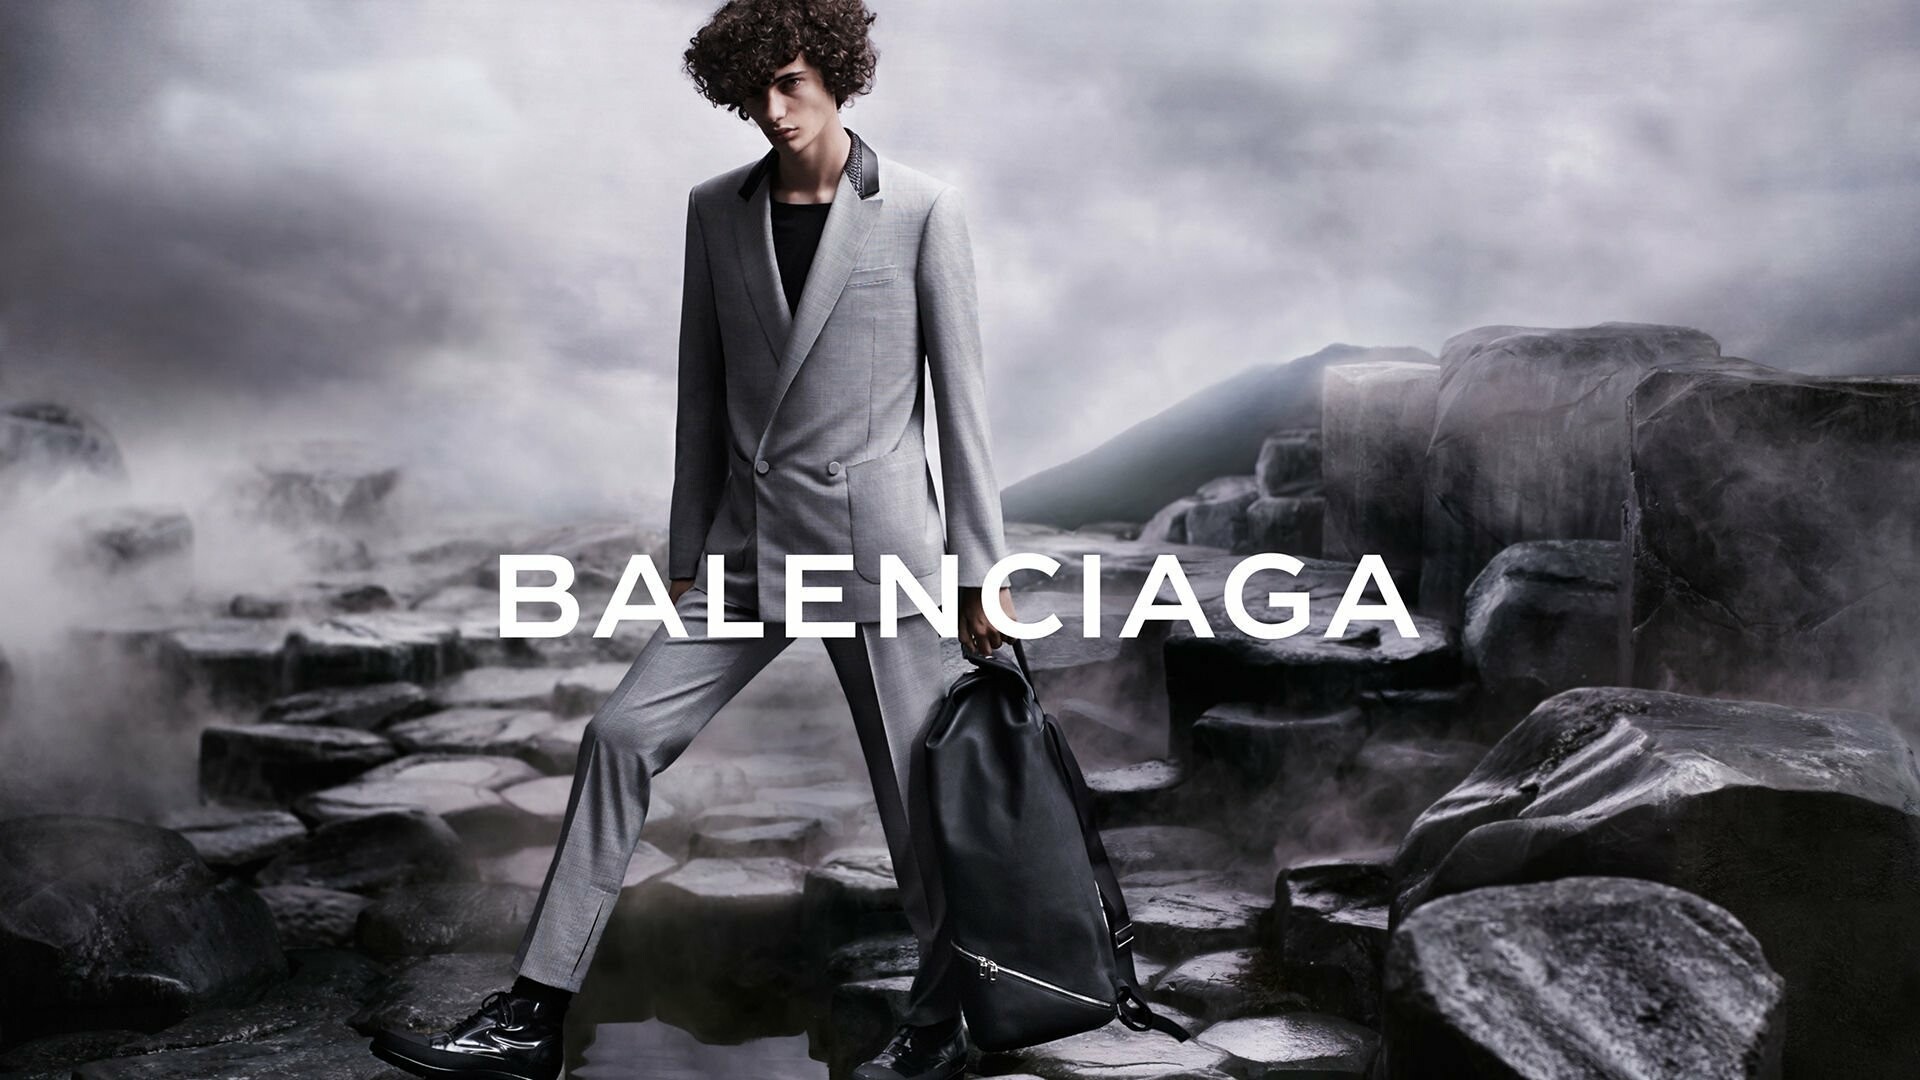 Balenciaga: Fashion label, Known for Triple S sneaker, a street-style favorite. 1920x1080 Full HD Wallpaper.